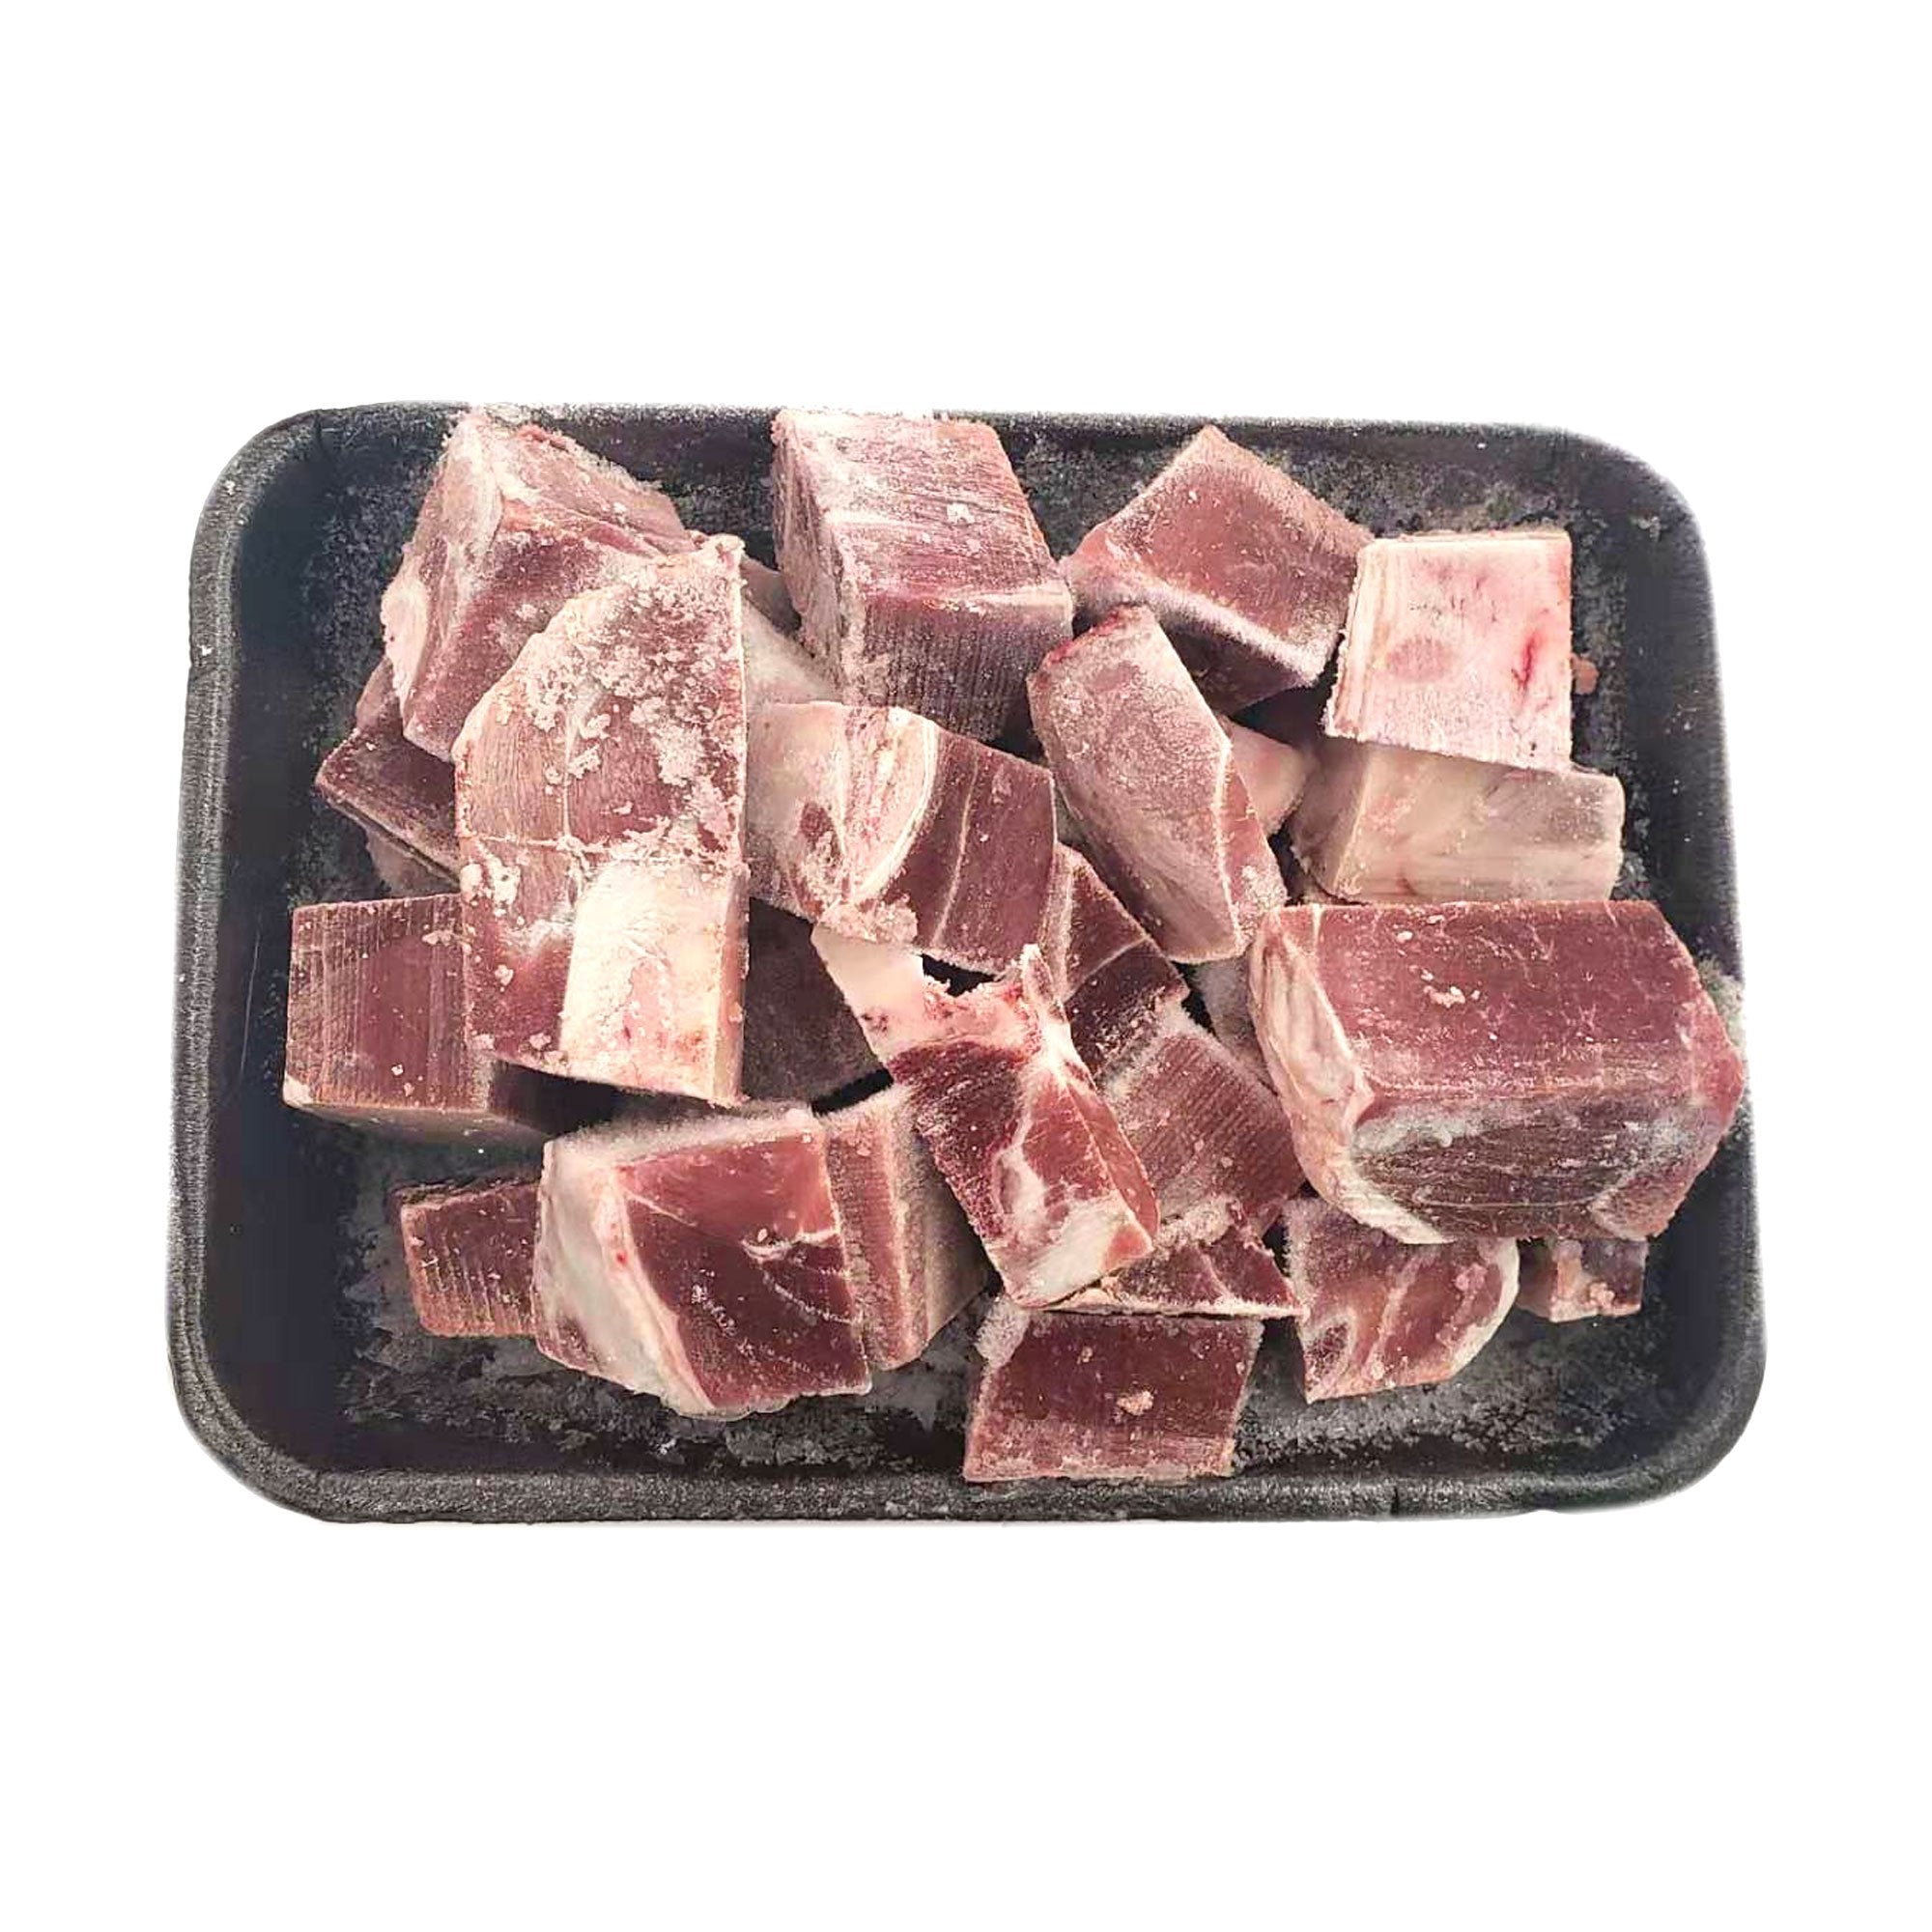 Frozen Mutton Shoulder Meat